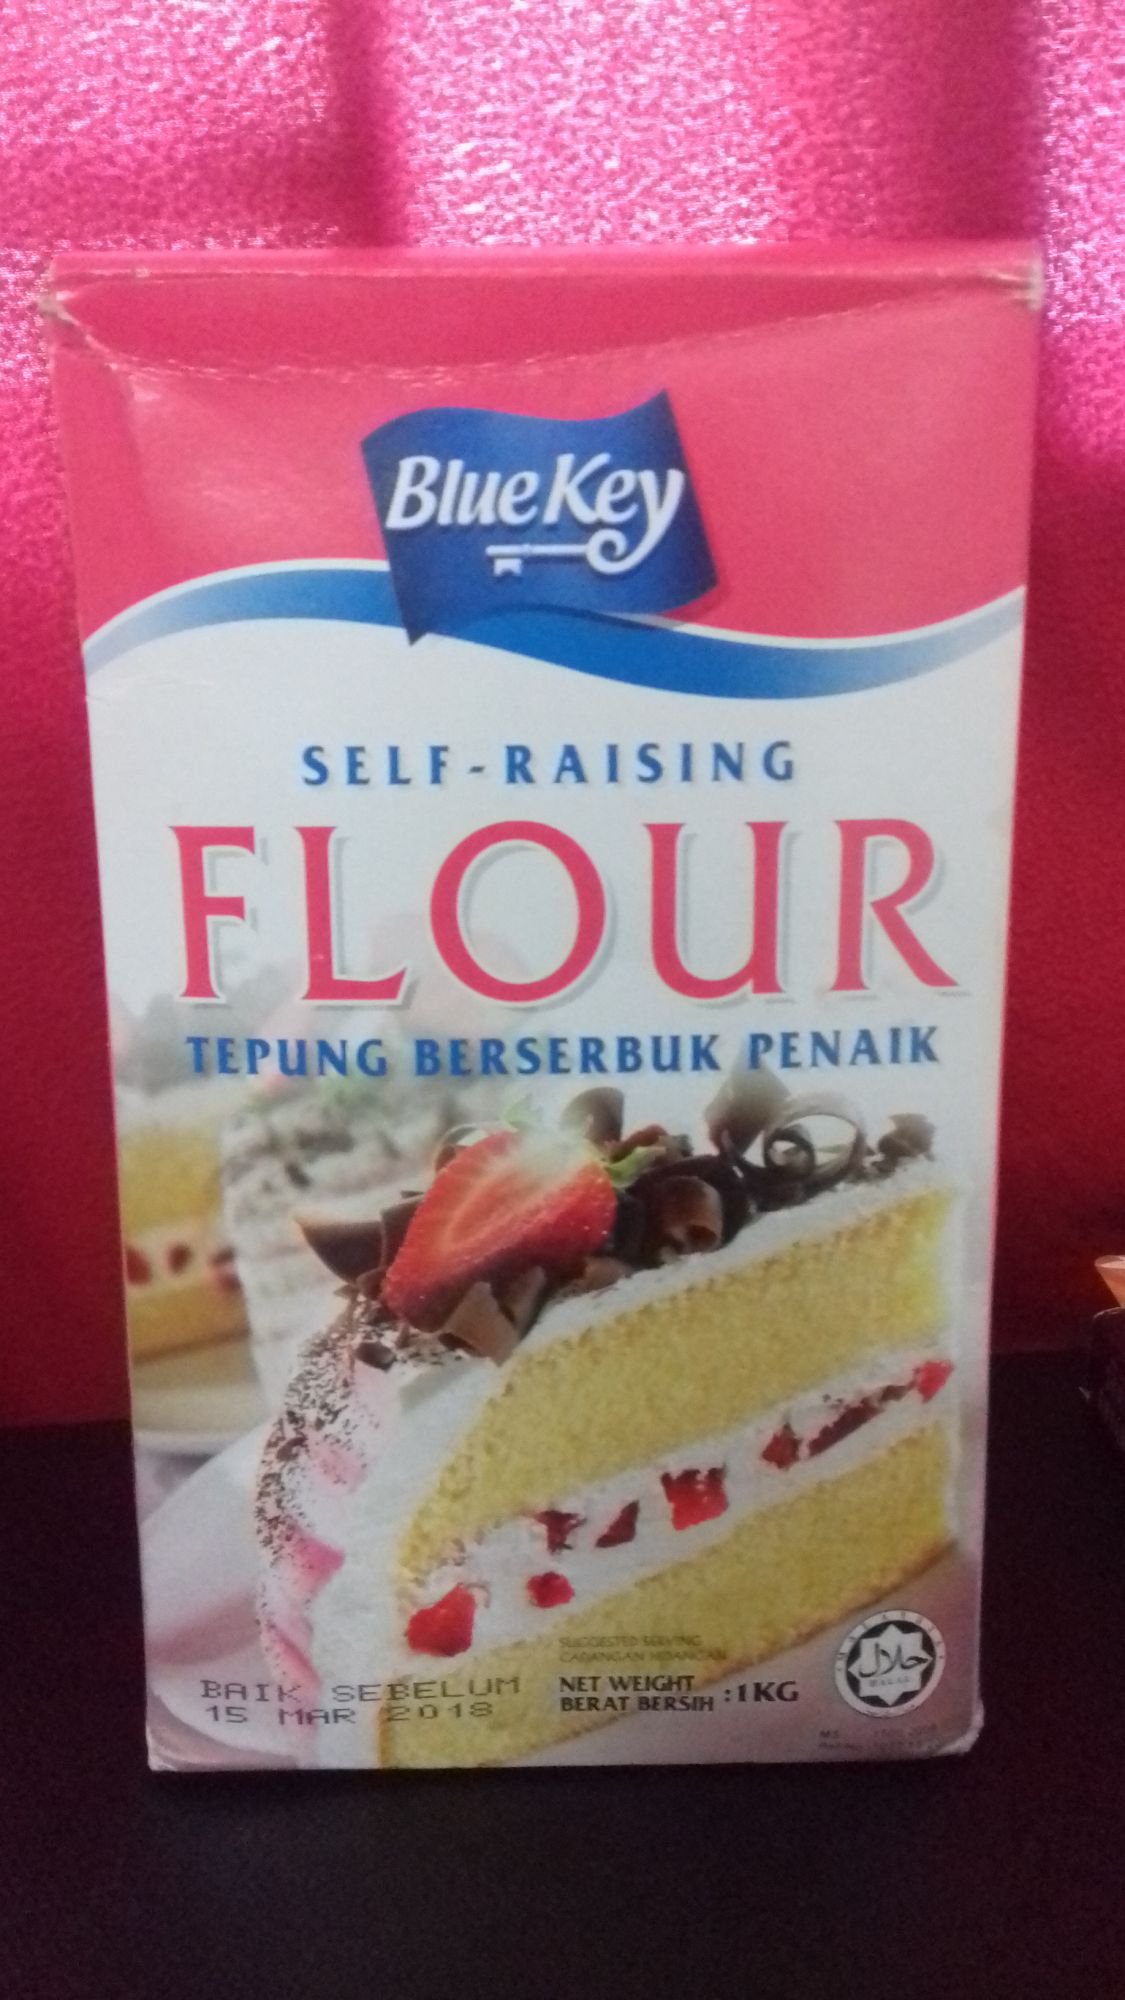 Blue Key Self Raising Flour reviews